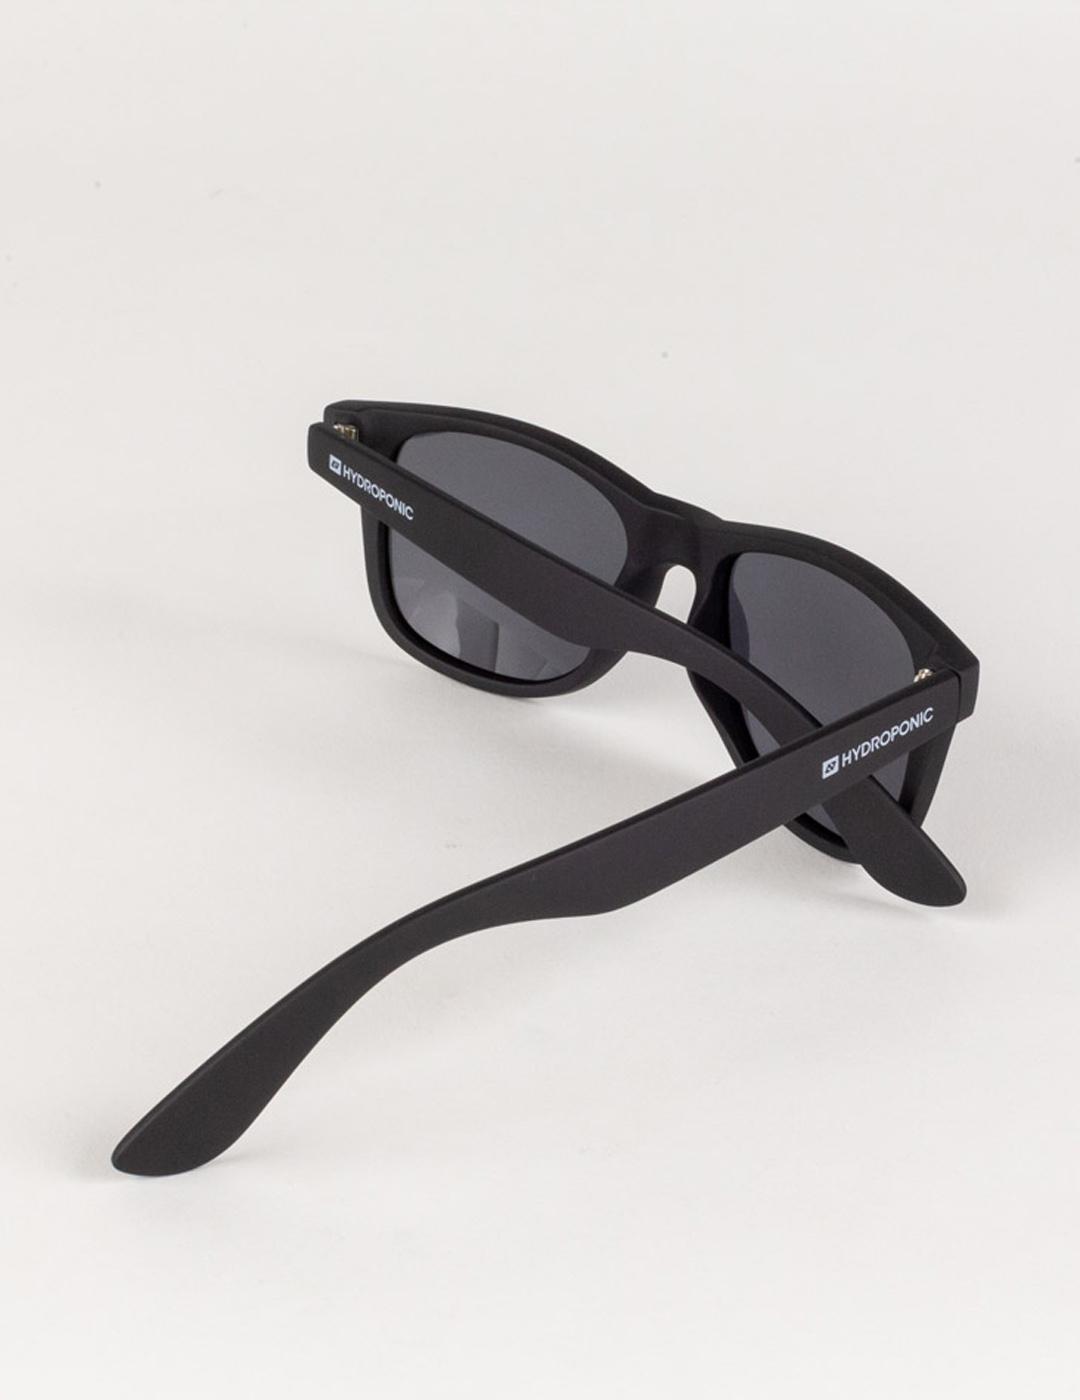 Gafas HYDROPONIC EW WILTON -  Rubber Black + Black